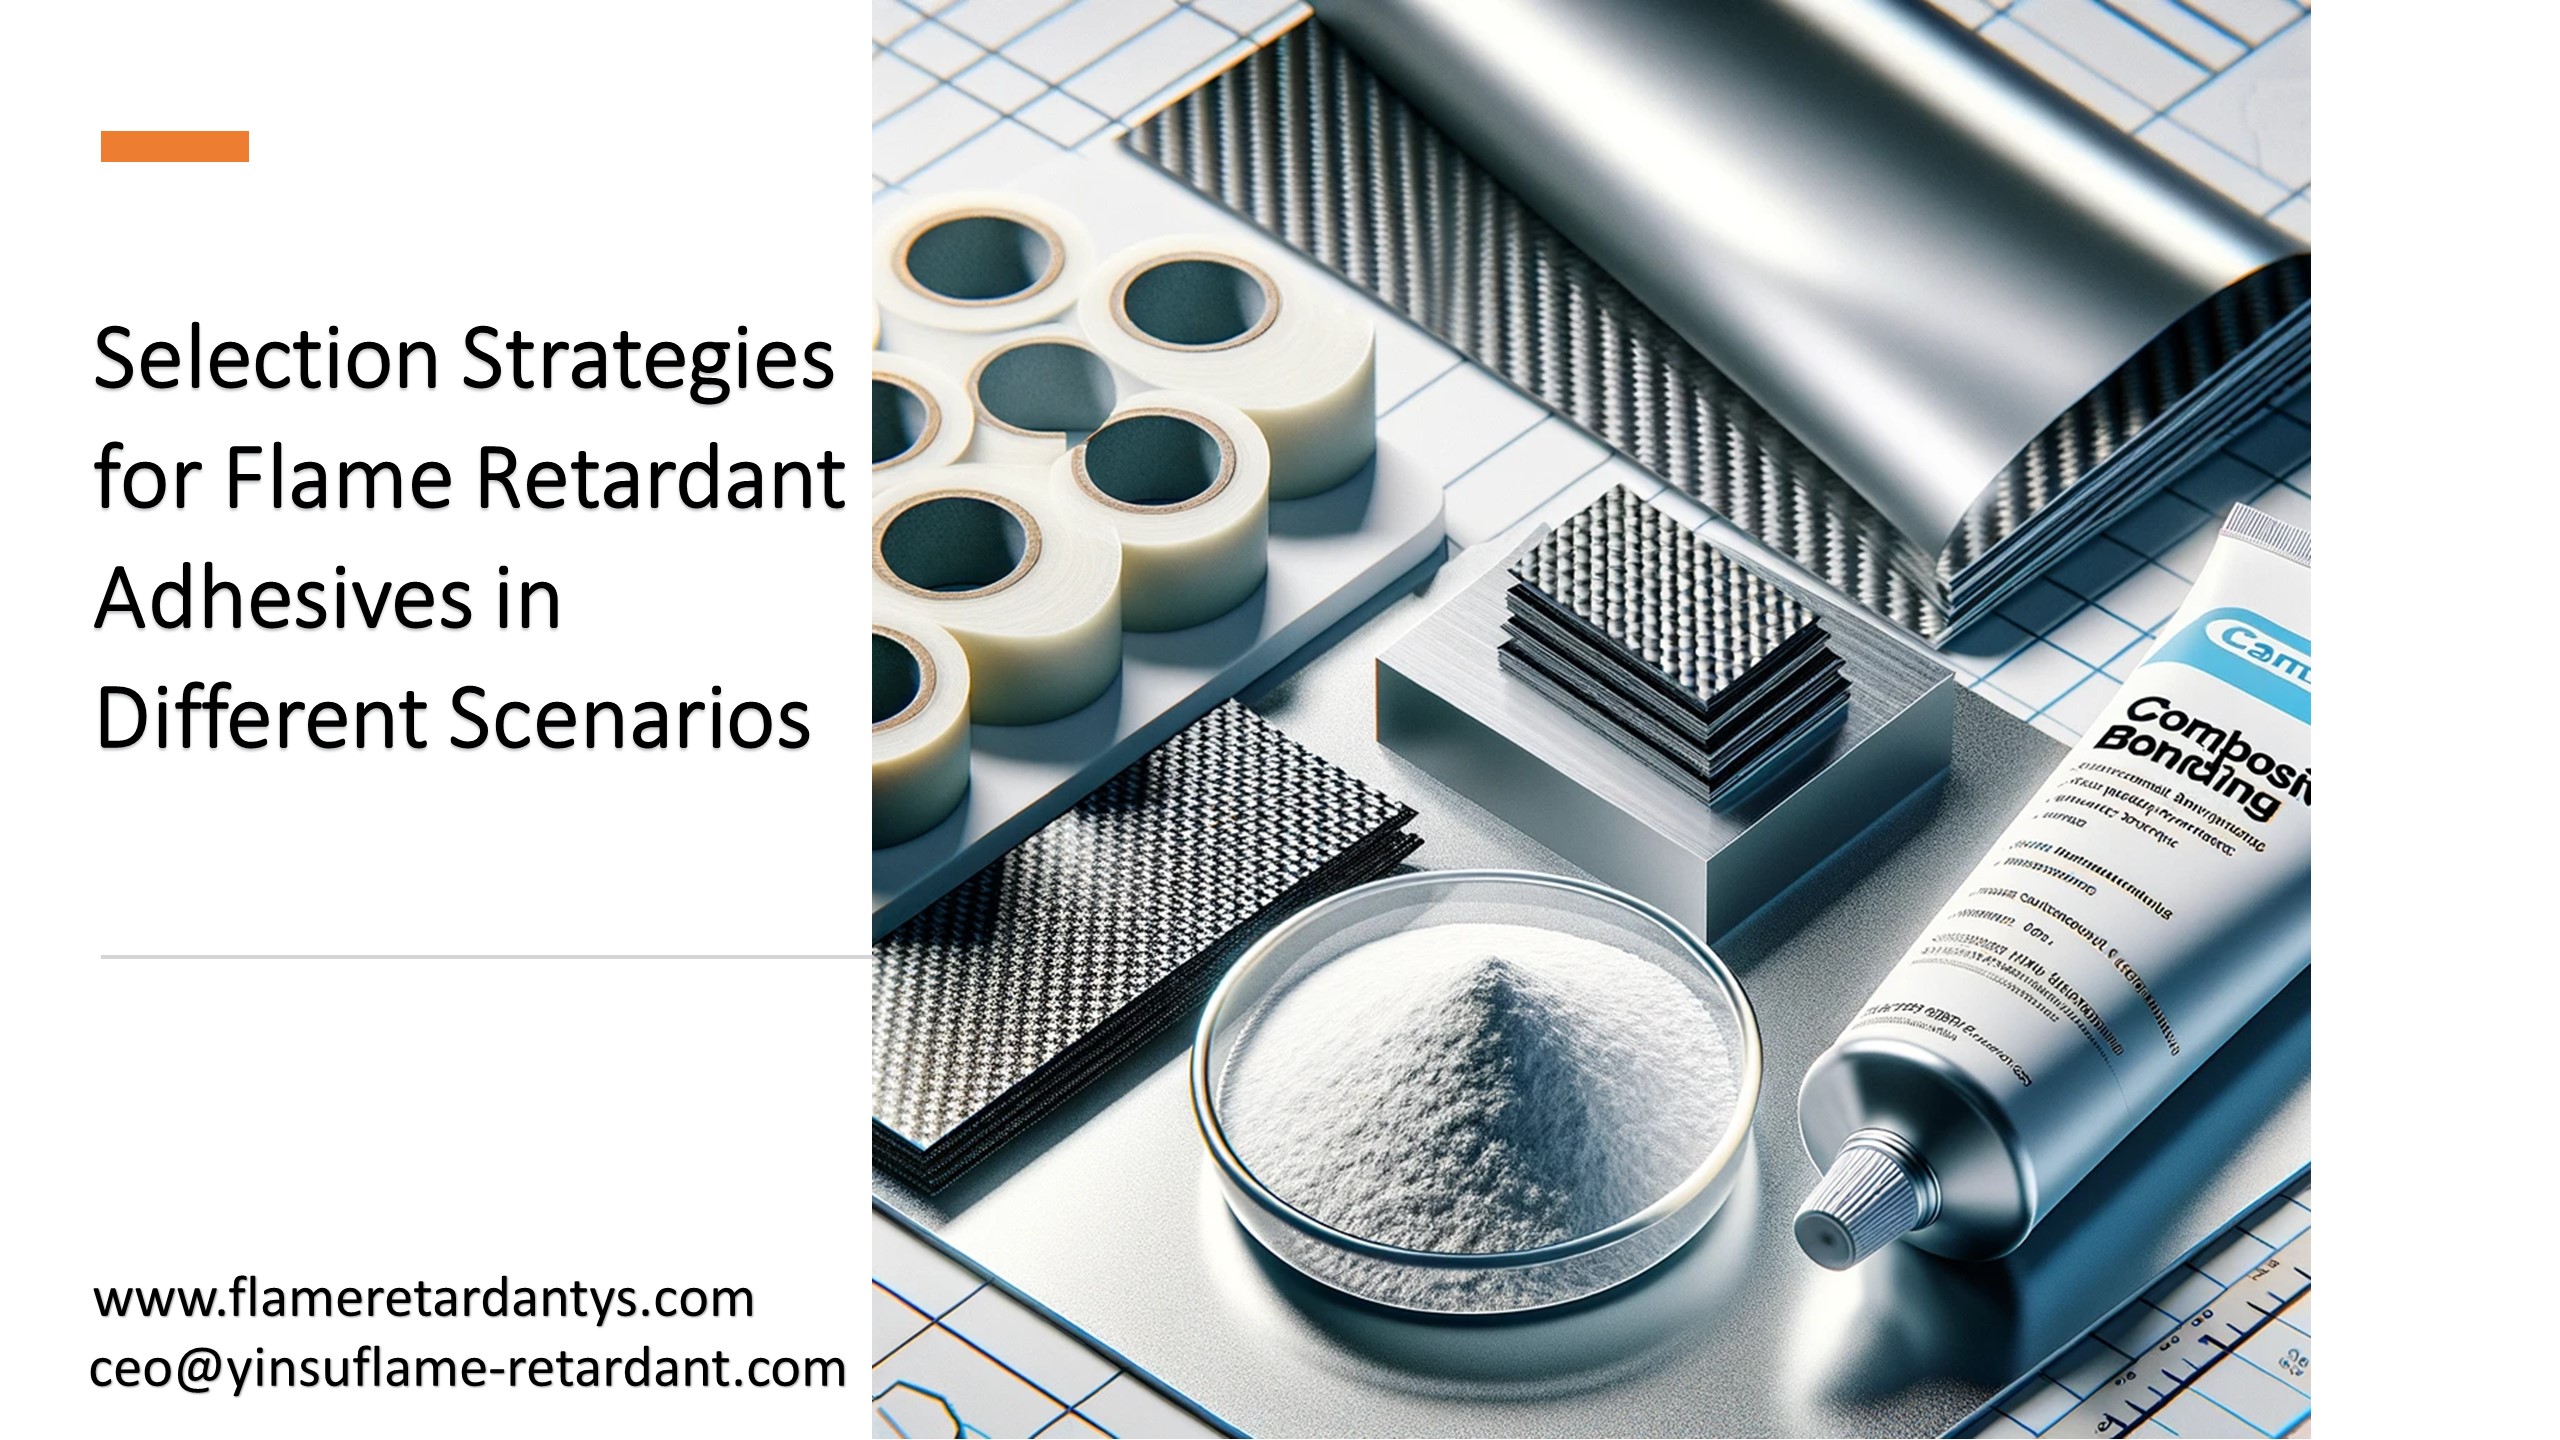 Selection Strategies for Flame Retardant Adhesives in Different Scenarios